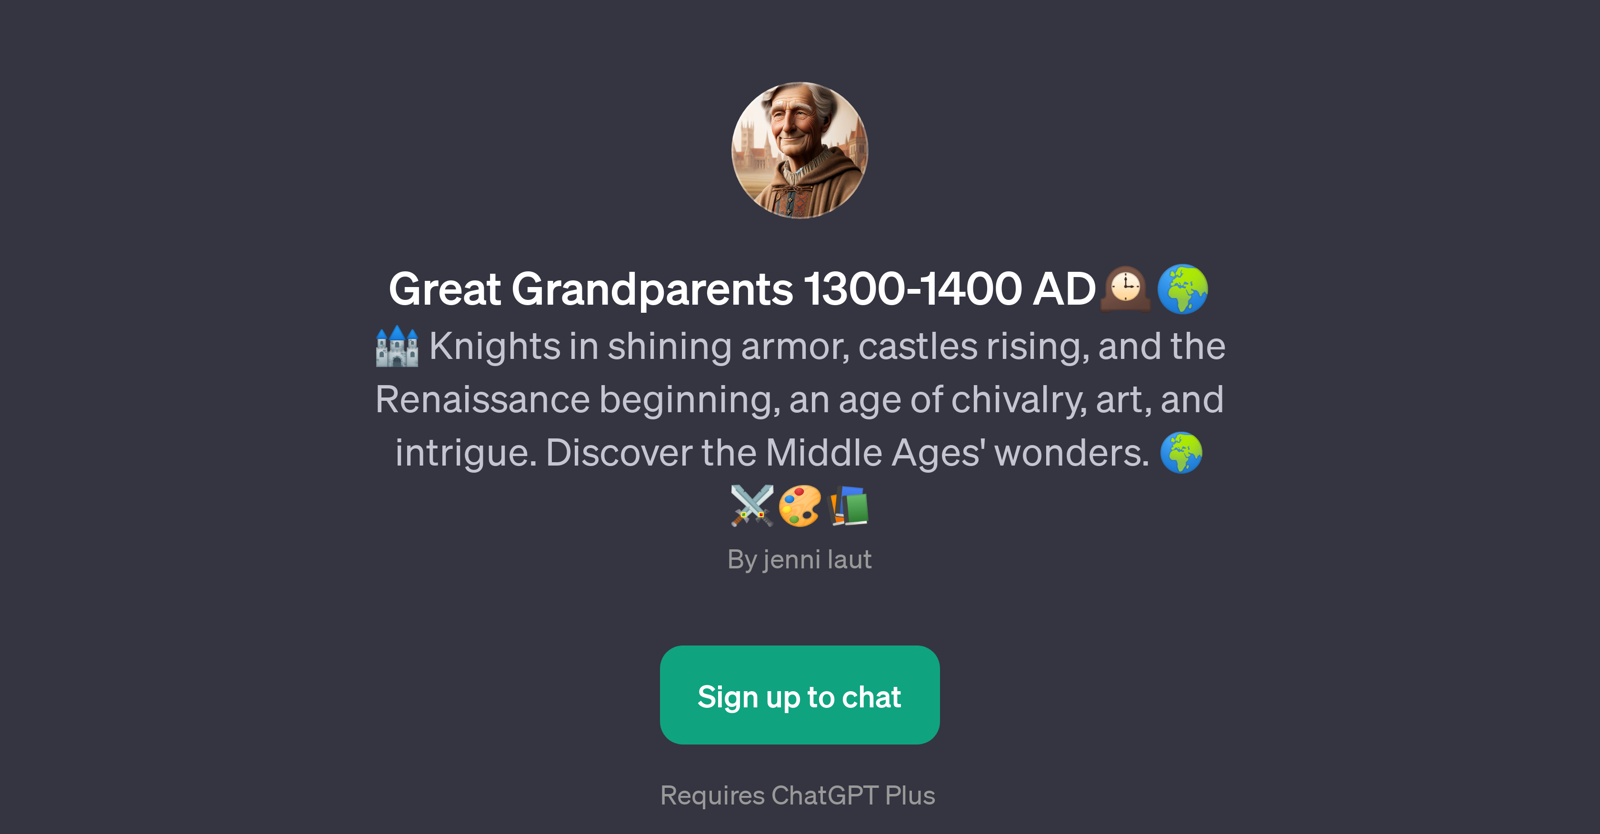 Great Grandparents 1300-1400 AD website